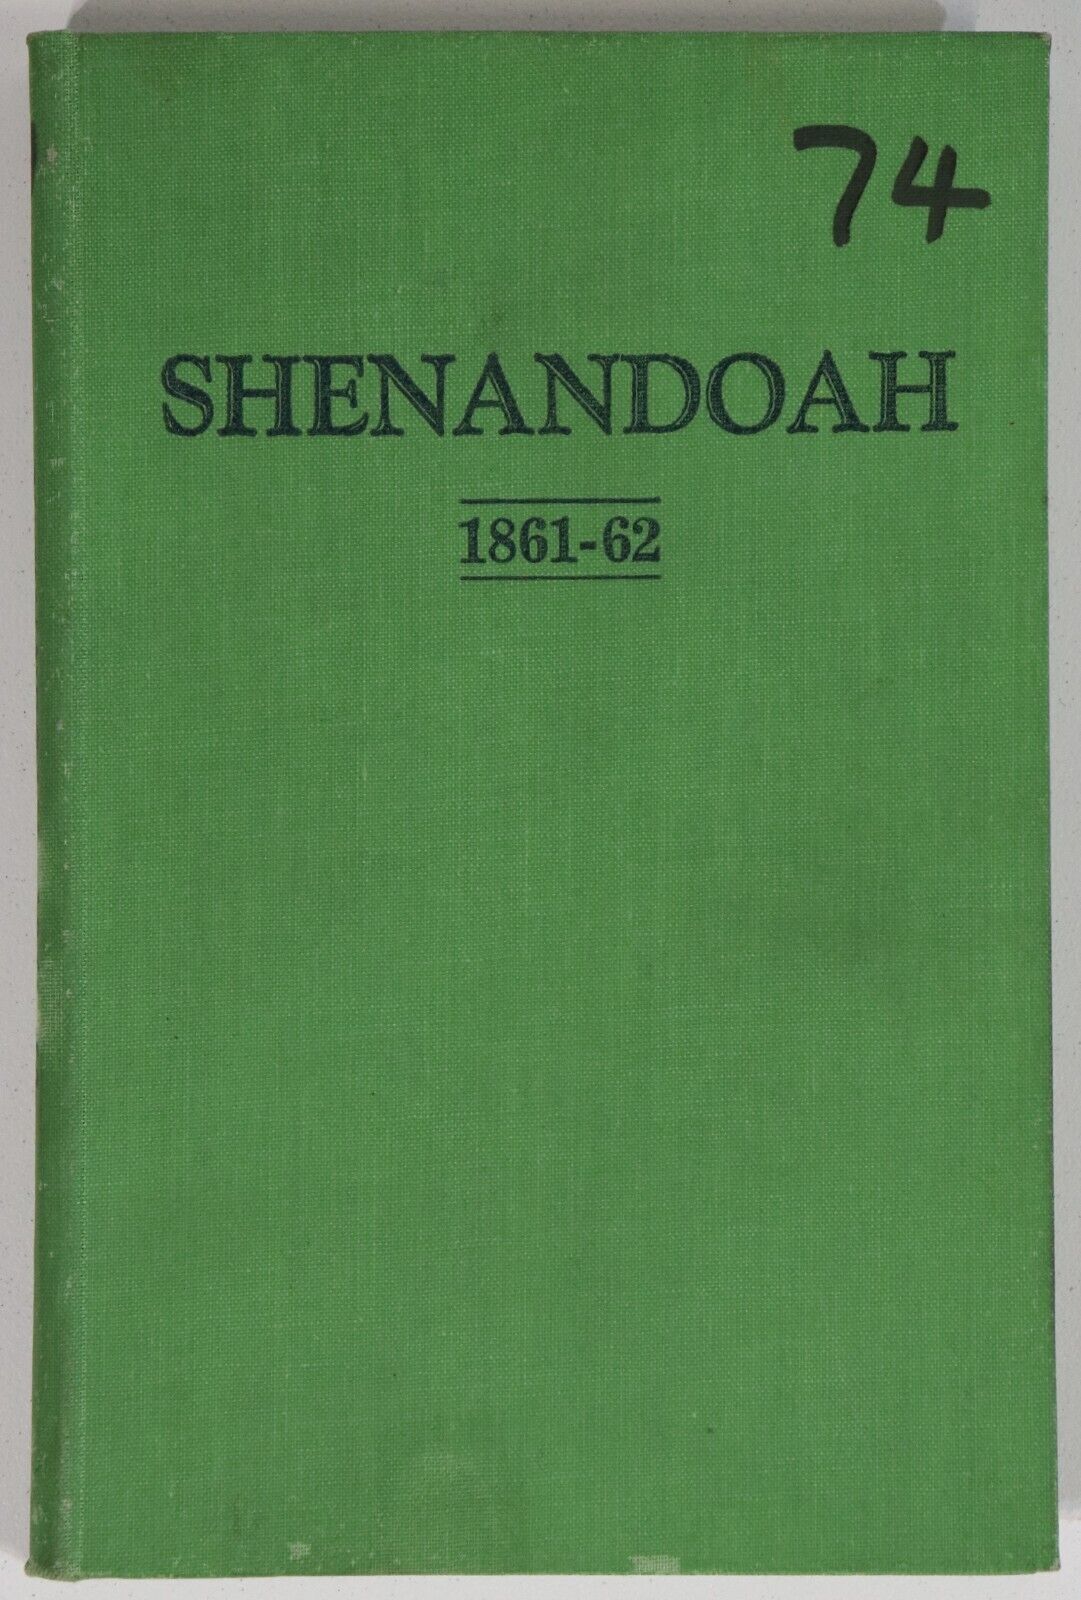 Shenandoah 1861 to 1862 by E.G. Keogh - American Civil War Military History Book